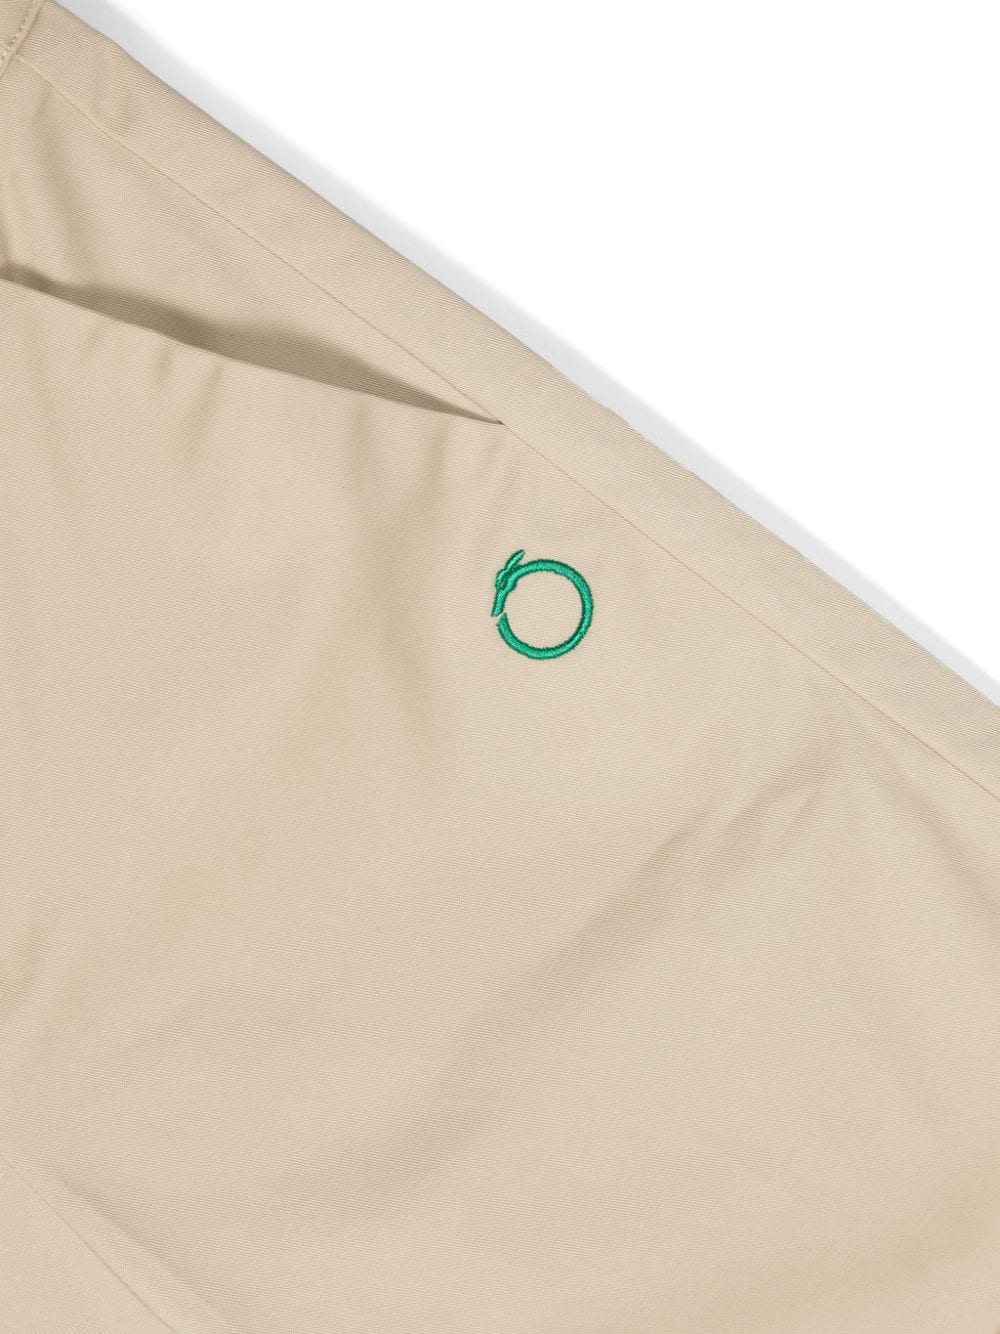 Beige Bermuda shorts for boys with green logo